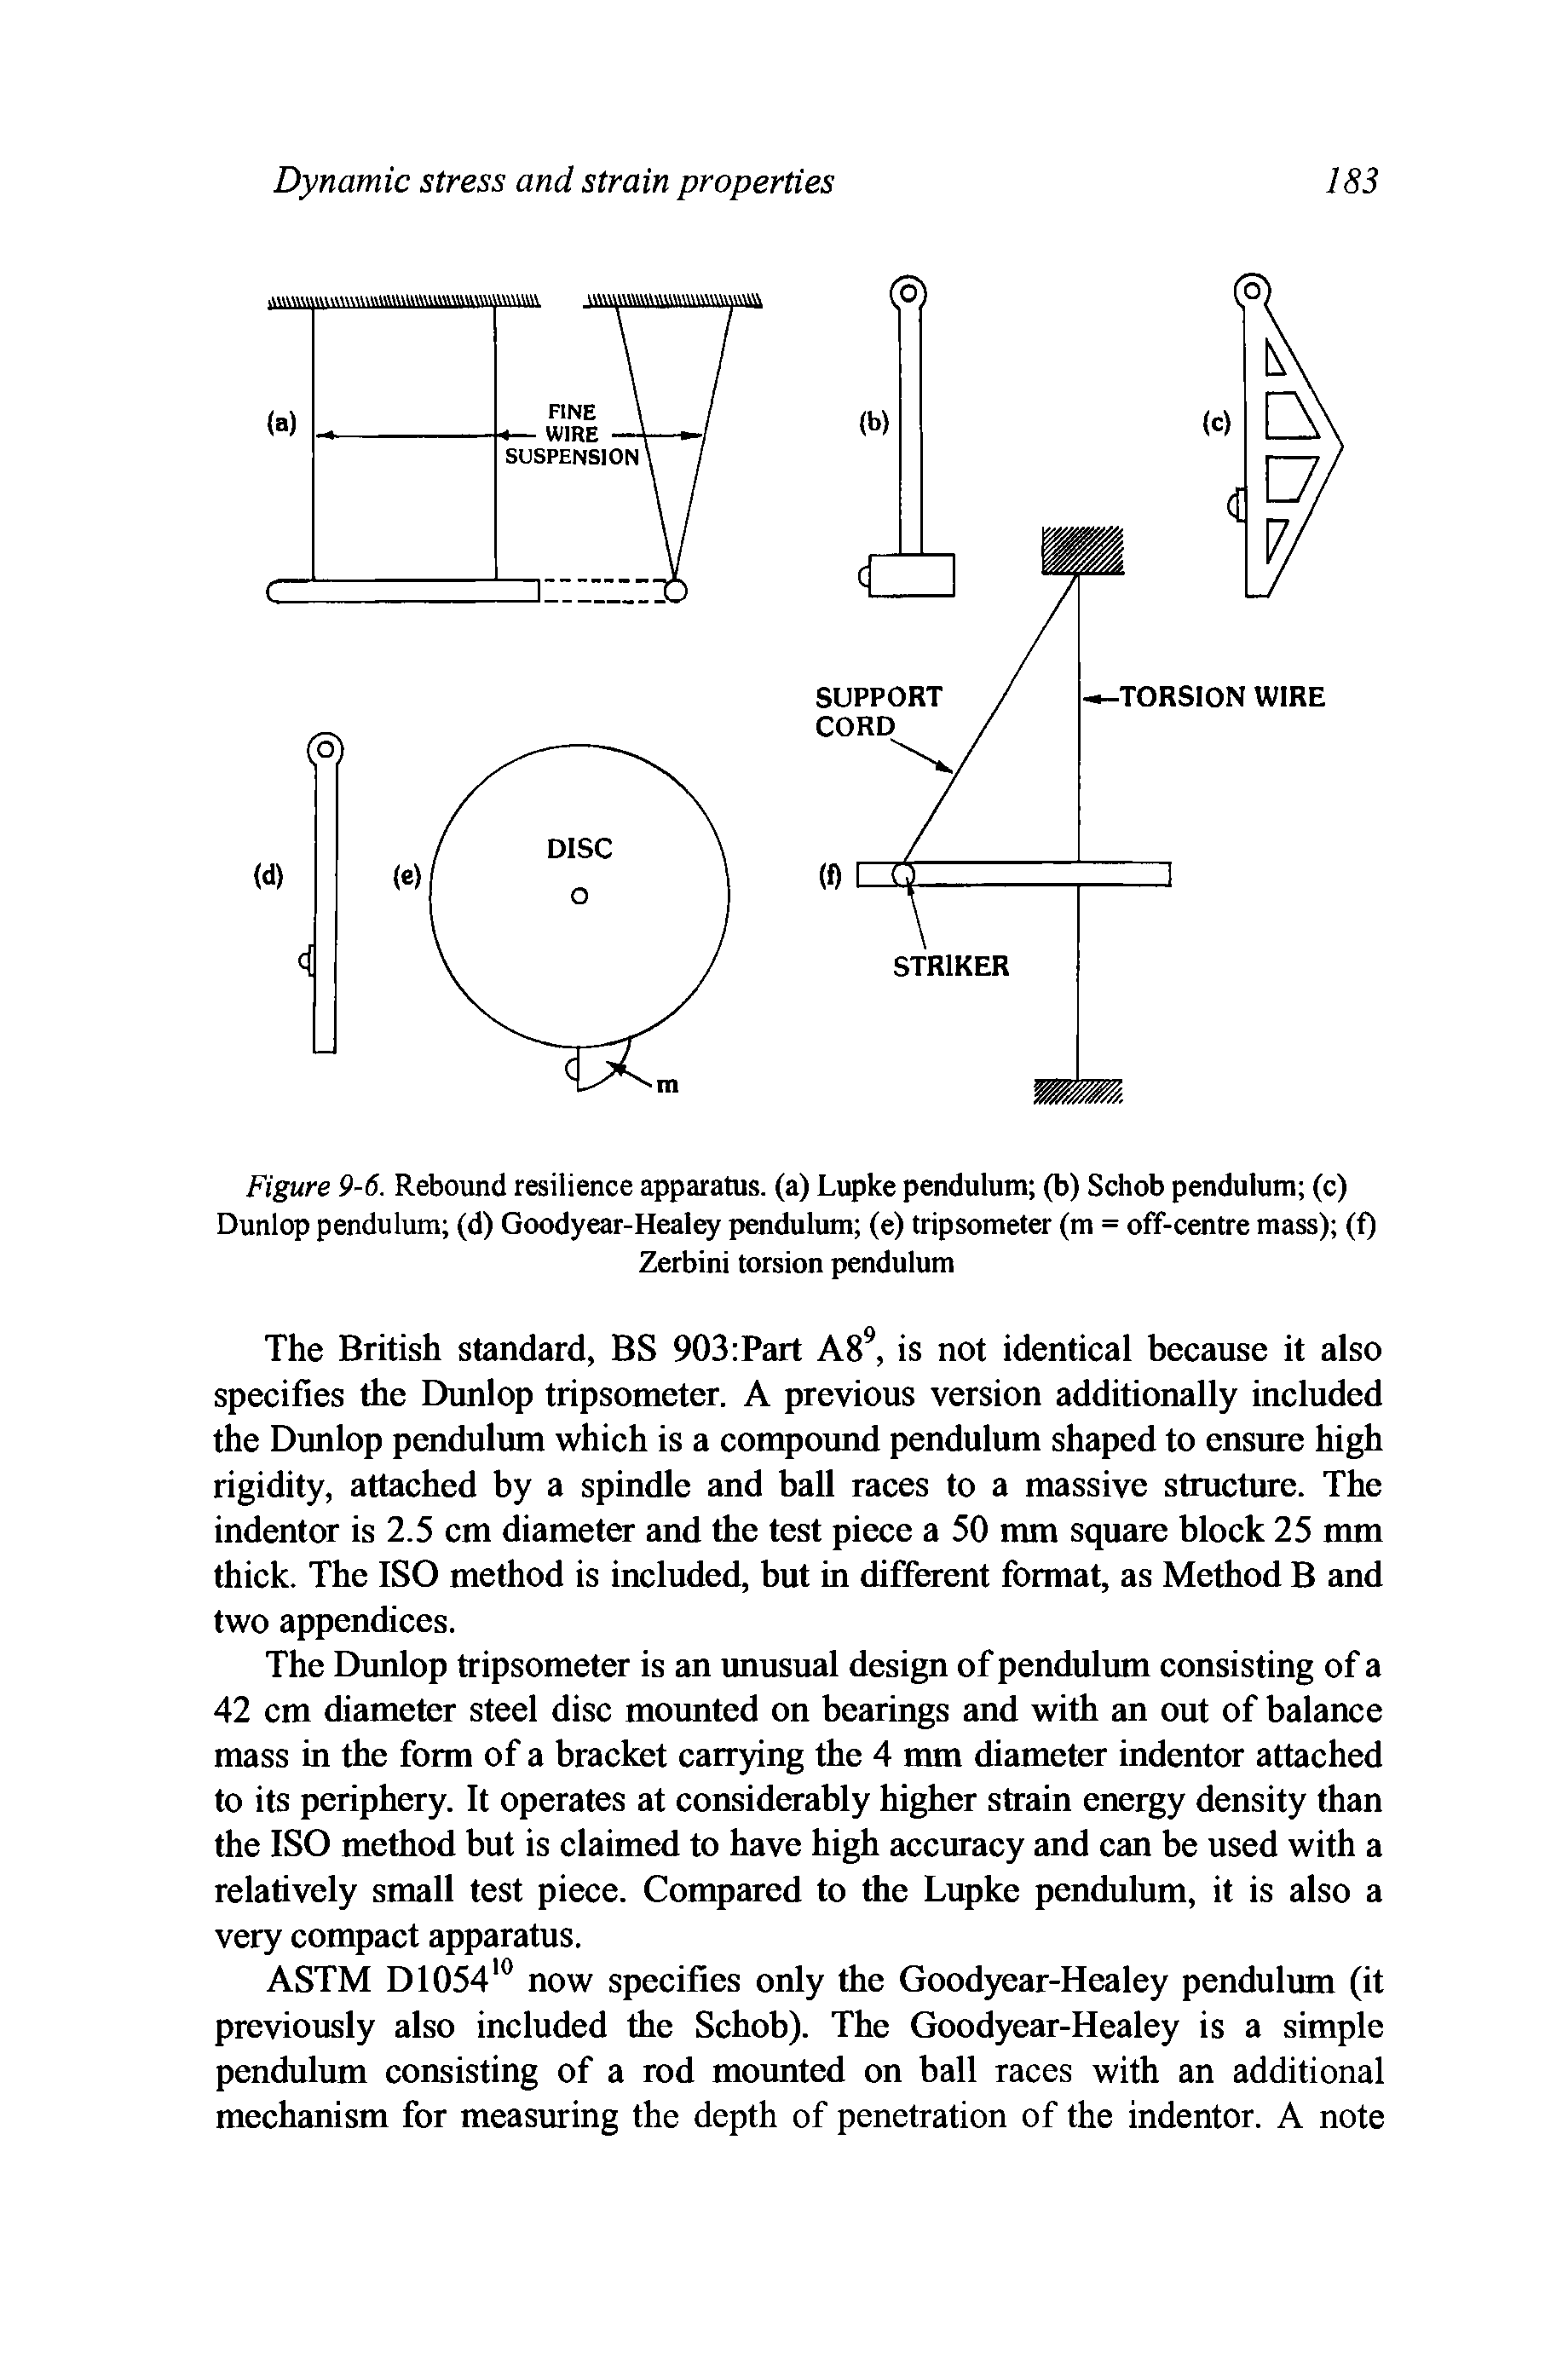 Figure 9-6. Rebound resilience apparatus, (a) Lupke pendulum (b) Schob pendulum (c) Dunlop pendulum (d) Goodyear-Healey pendulum (e) tripsometer (m = off-centre mass) (f)...